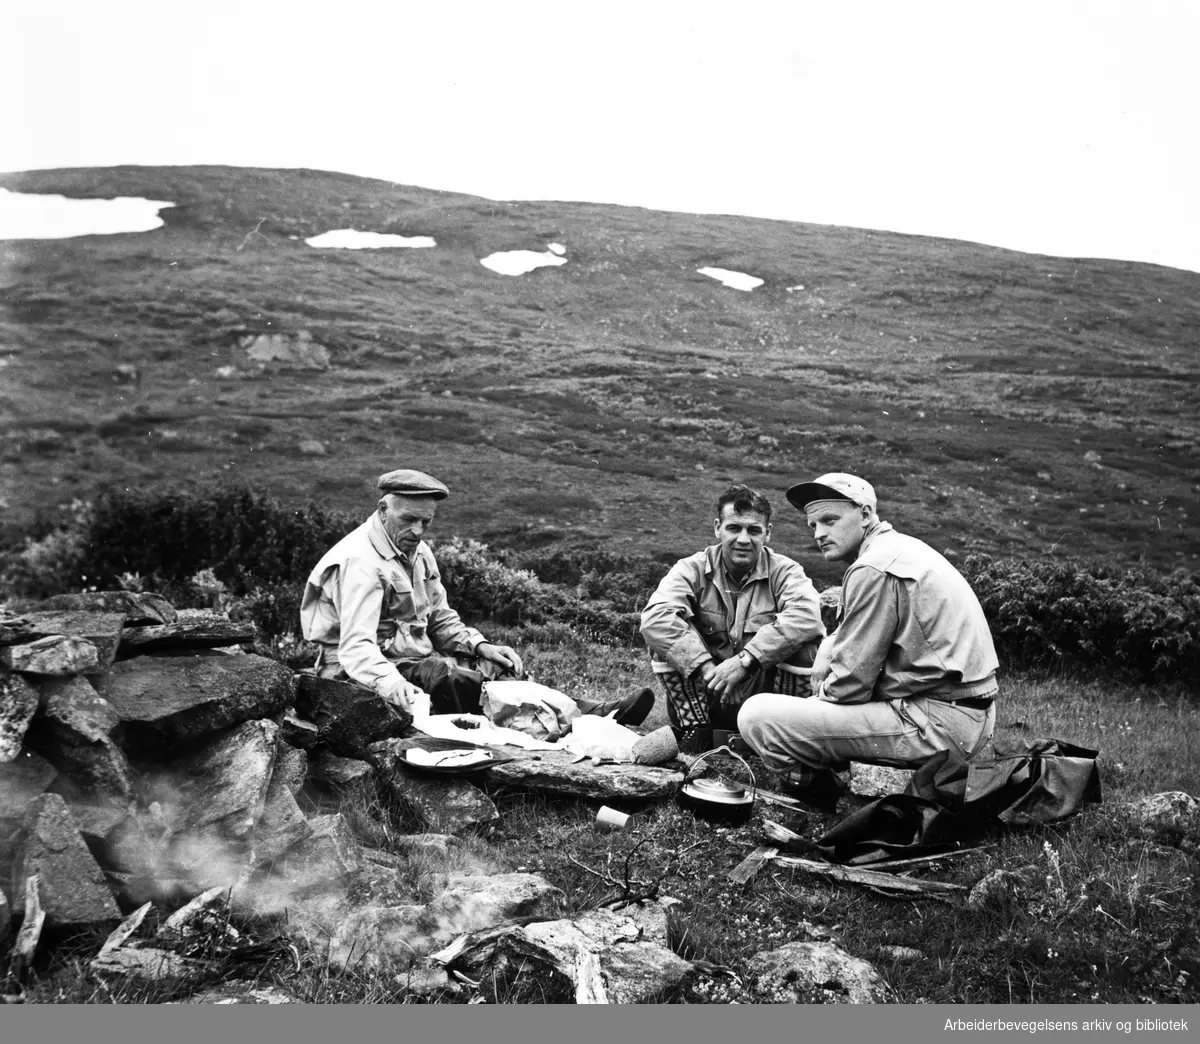 Martin Tranmæl, Rolf Ruud og Odd Sevje på Hardangervidda, 1956.